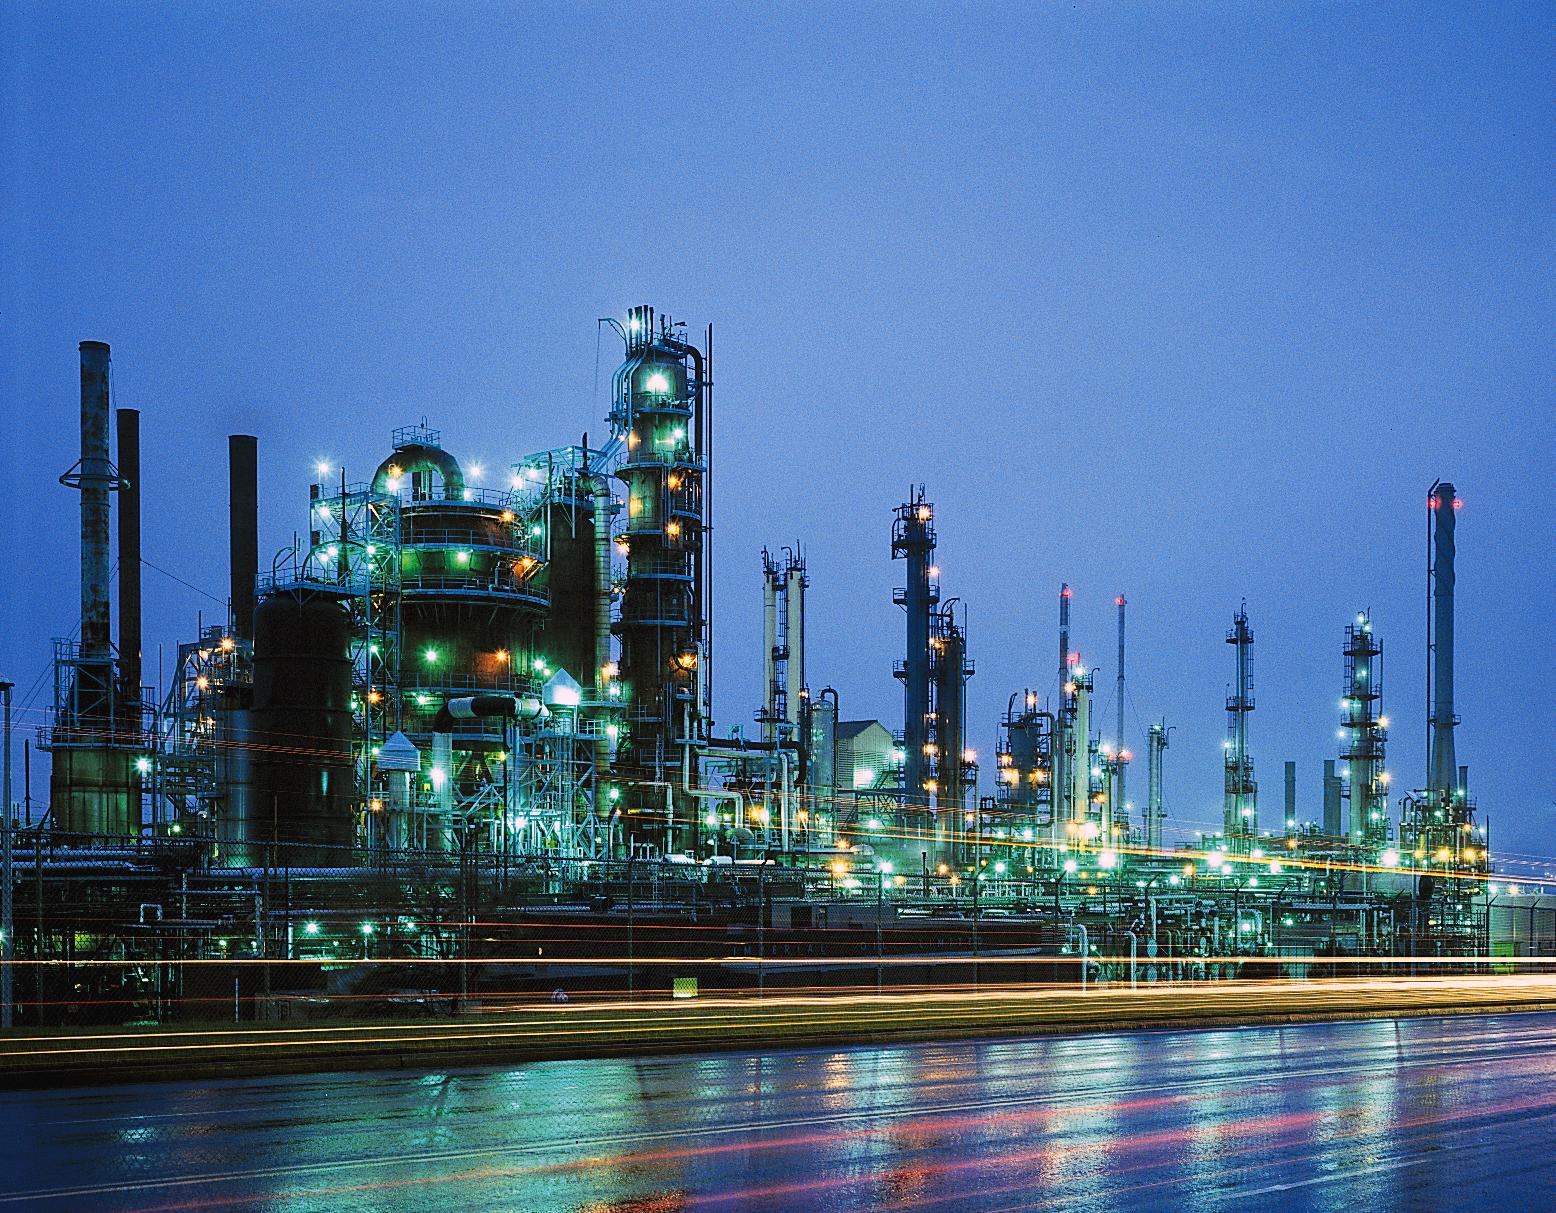 Imperial Oil - Dartmouth Refinery